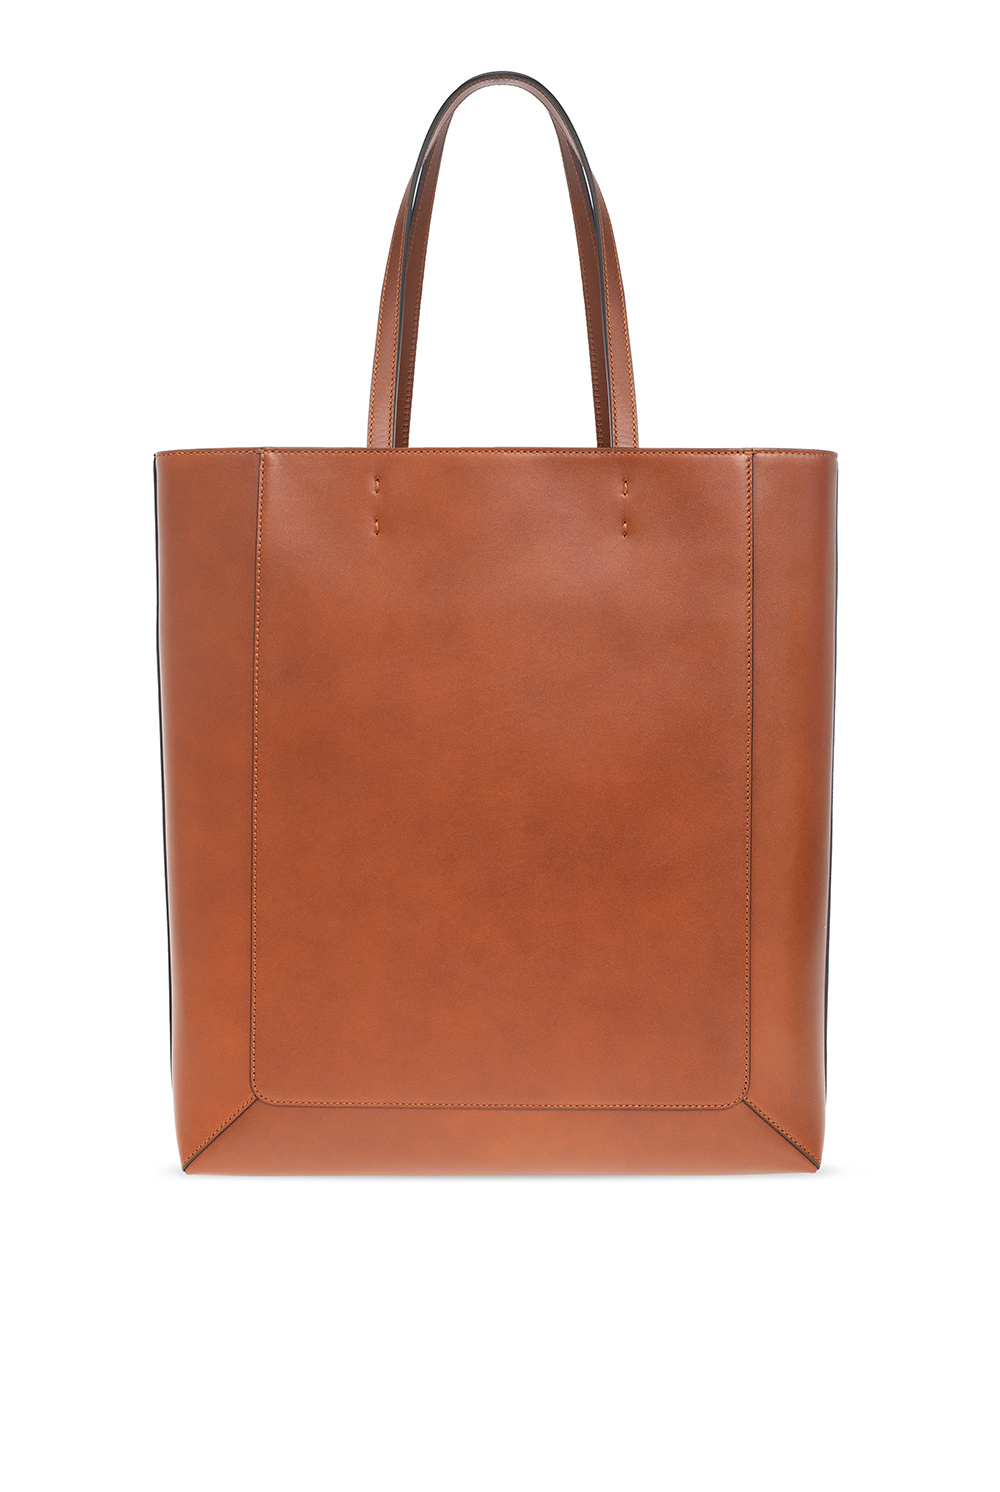 Gucci ‘Charisma’ shopper bag